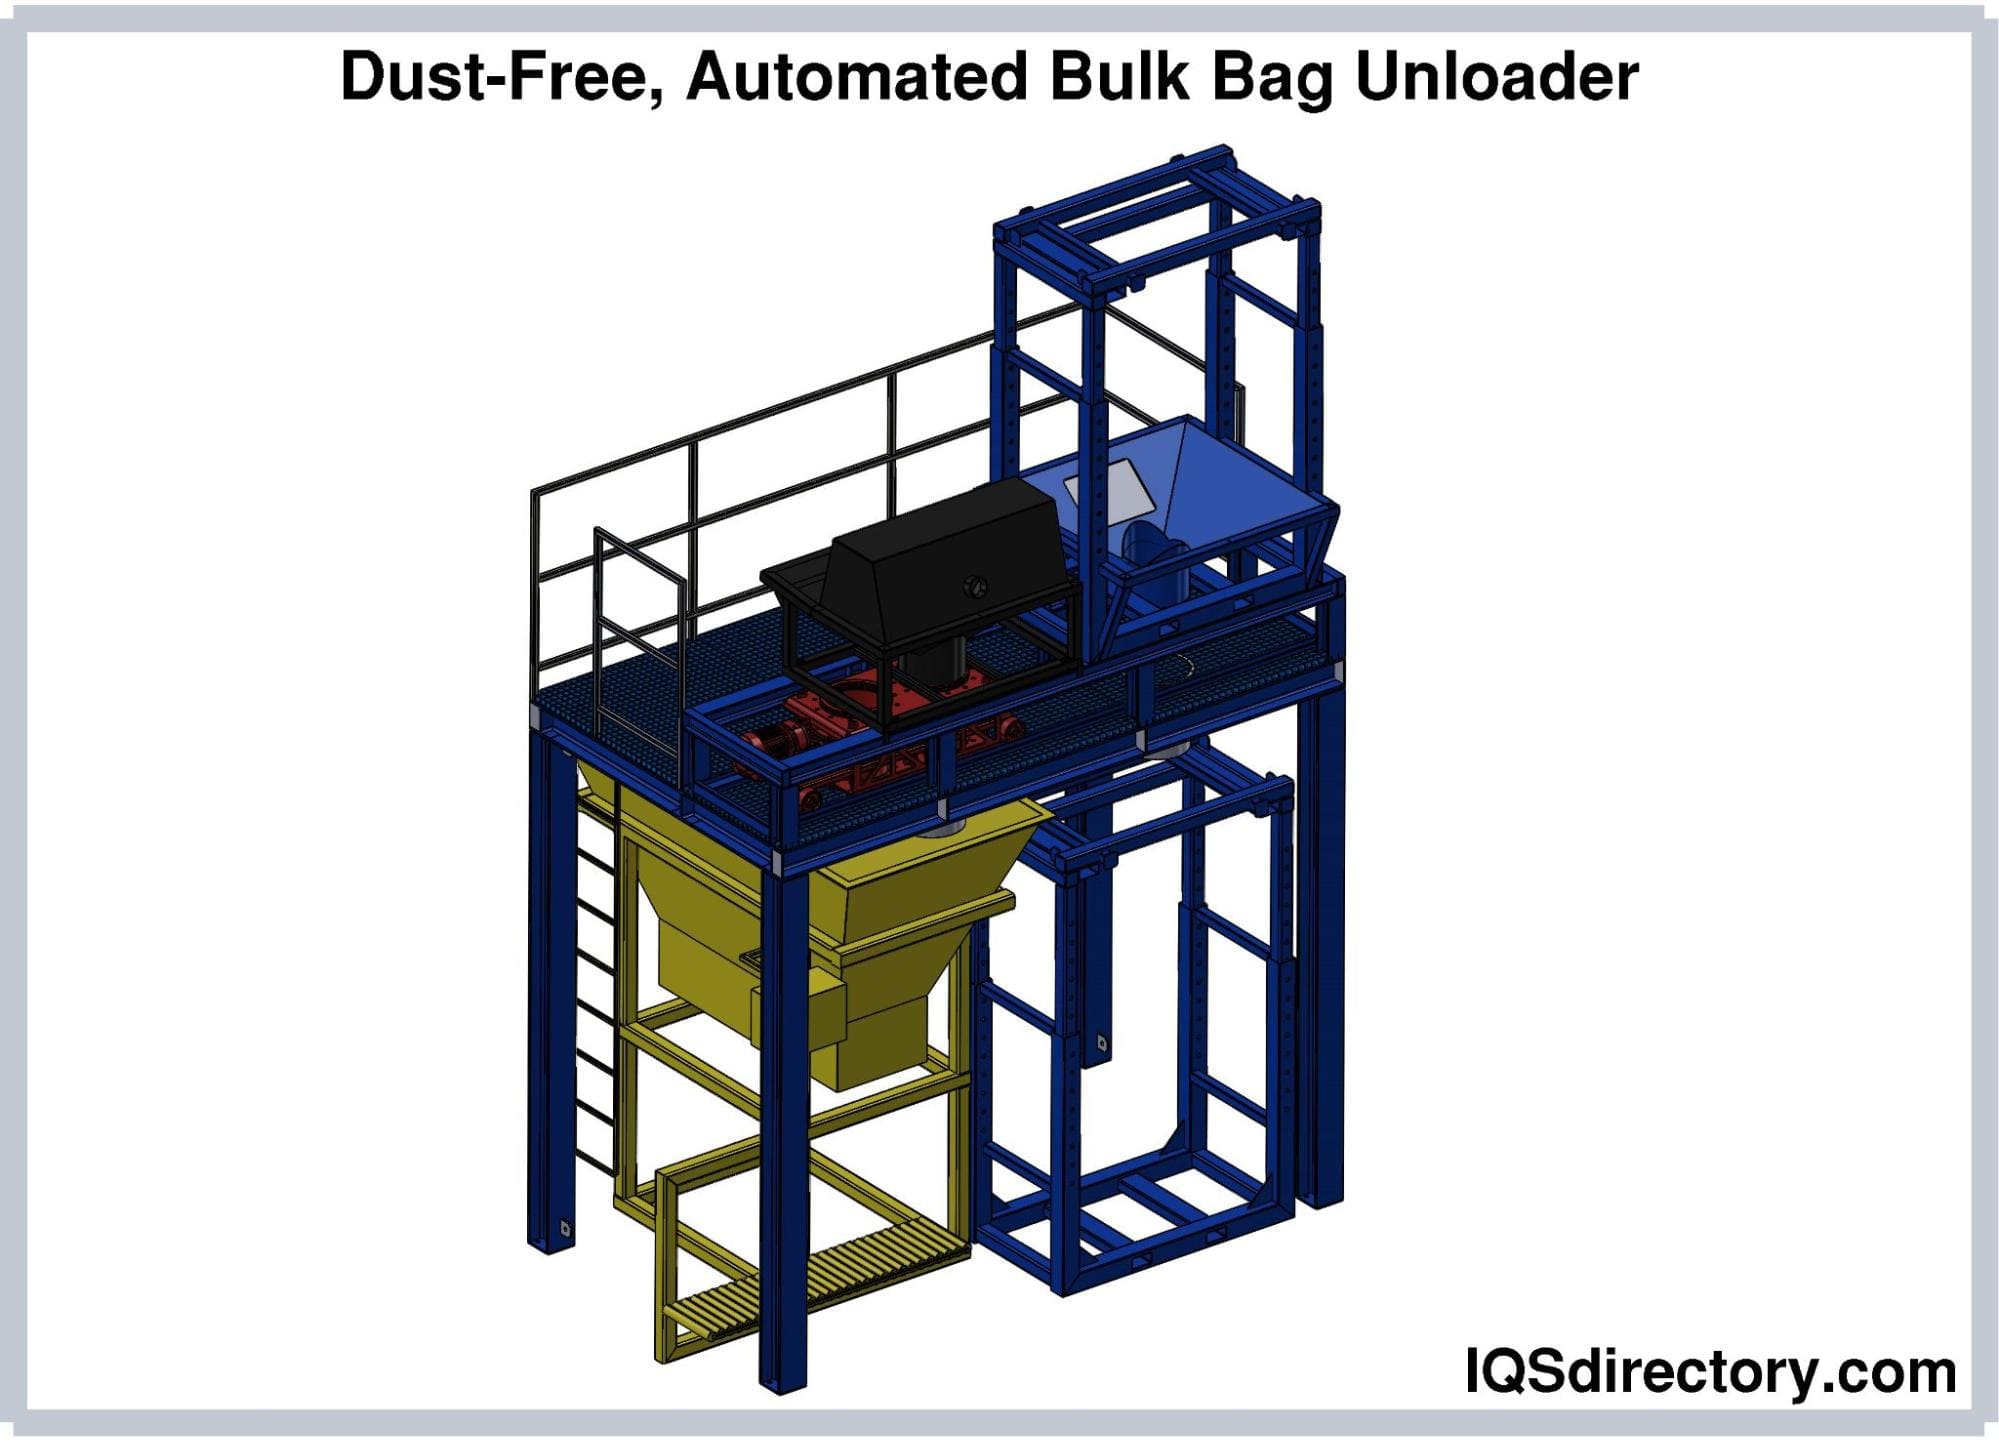 Dust-Free, Automated Bulk Bag Unloader